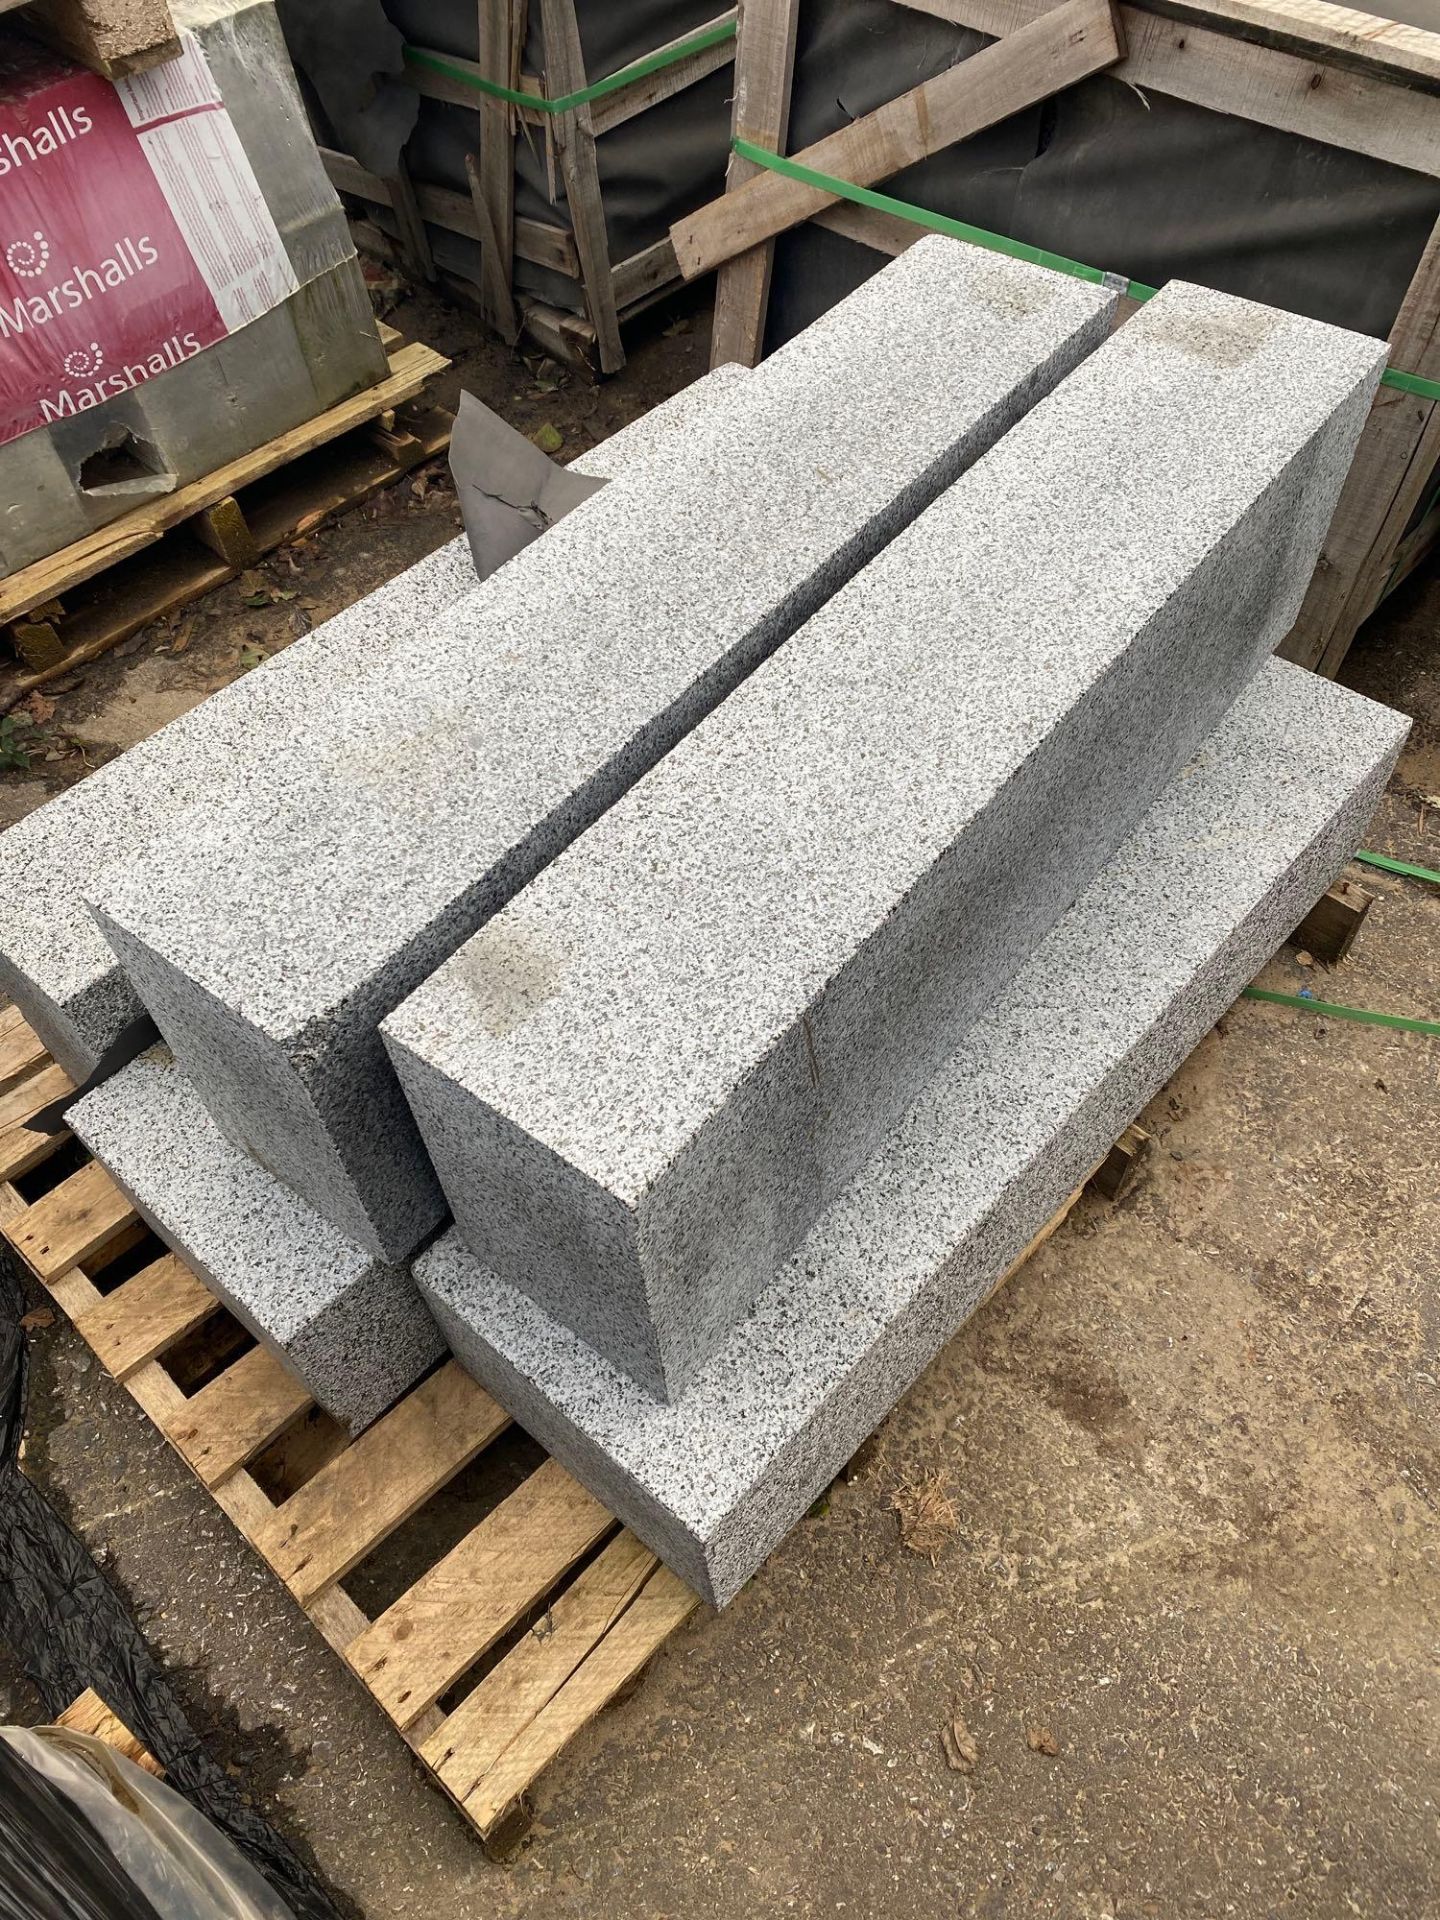 9 decorative granite blocks - Image 2 of 2